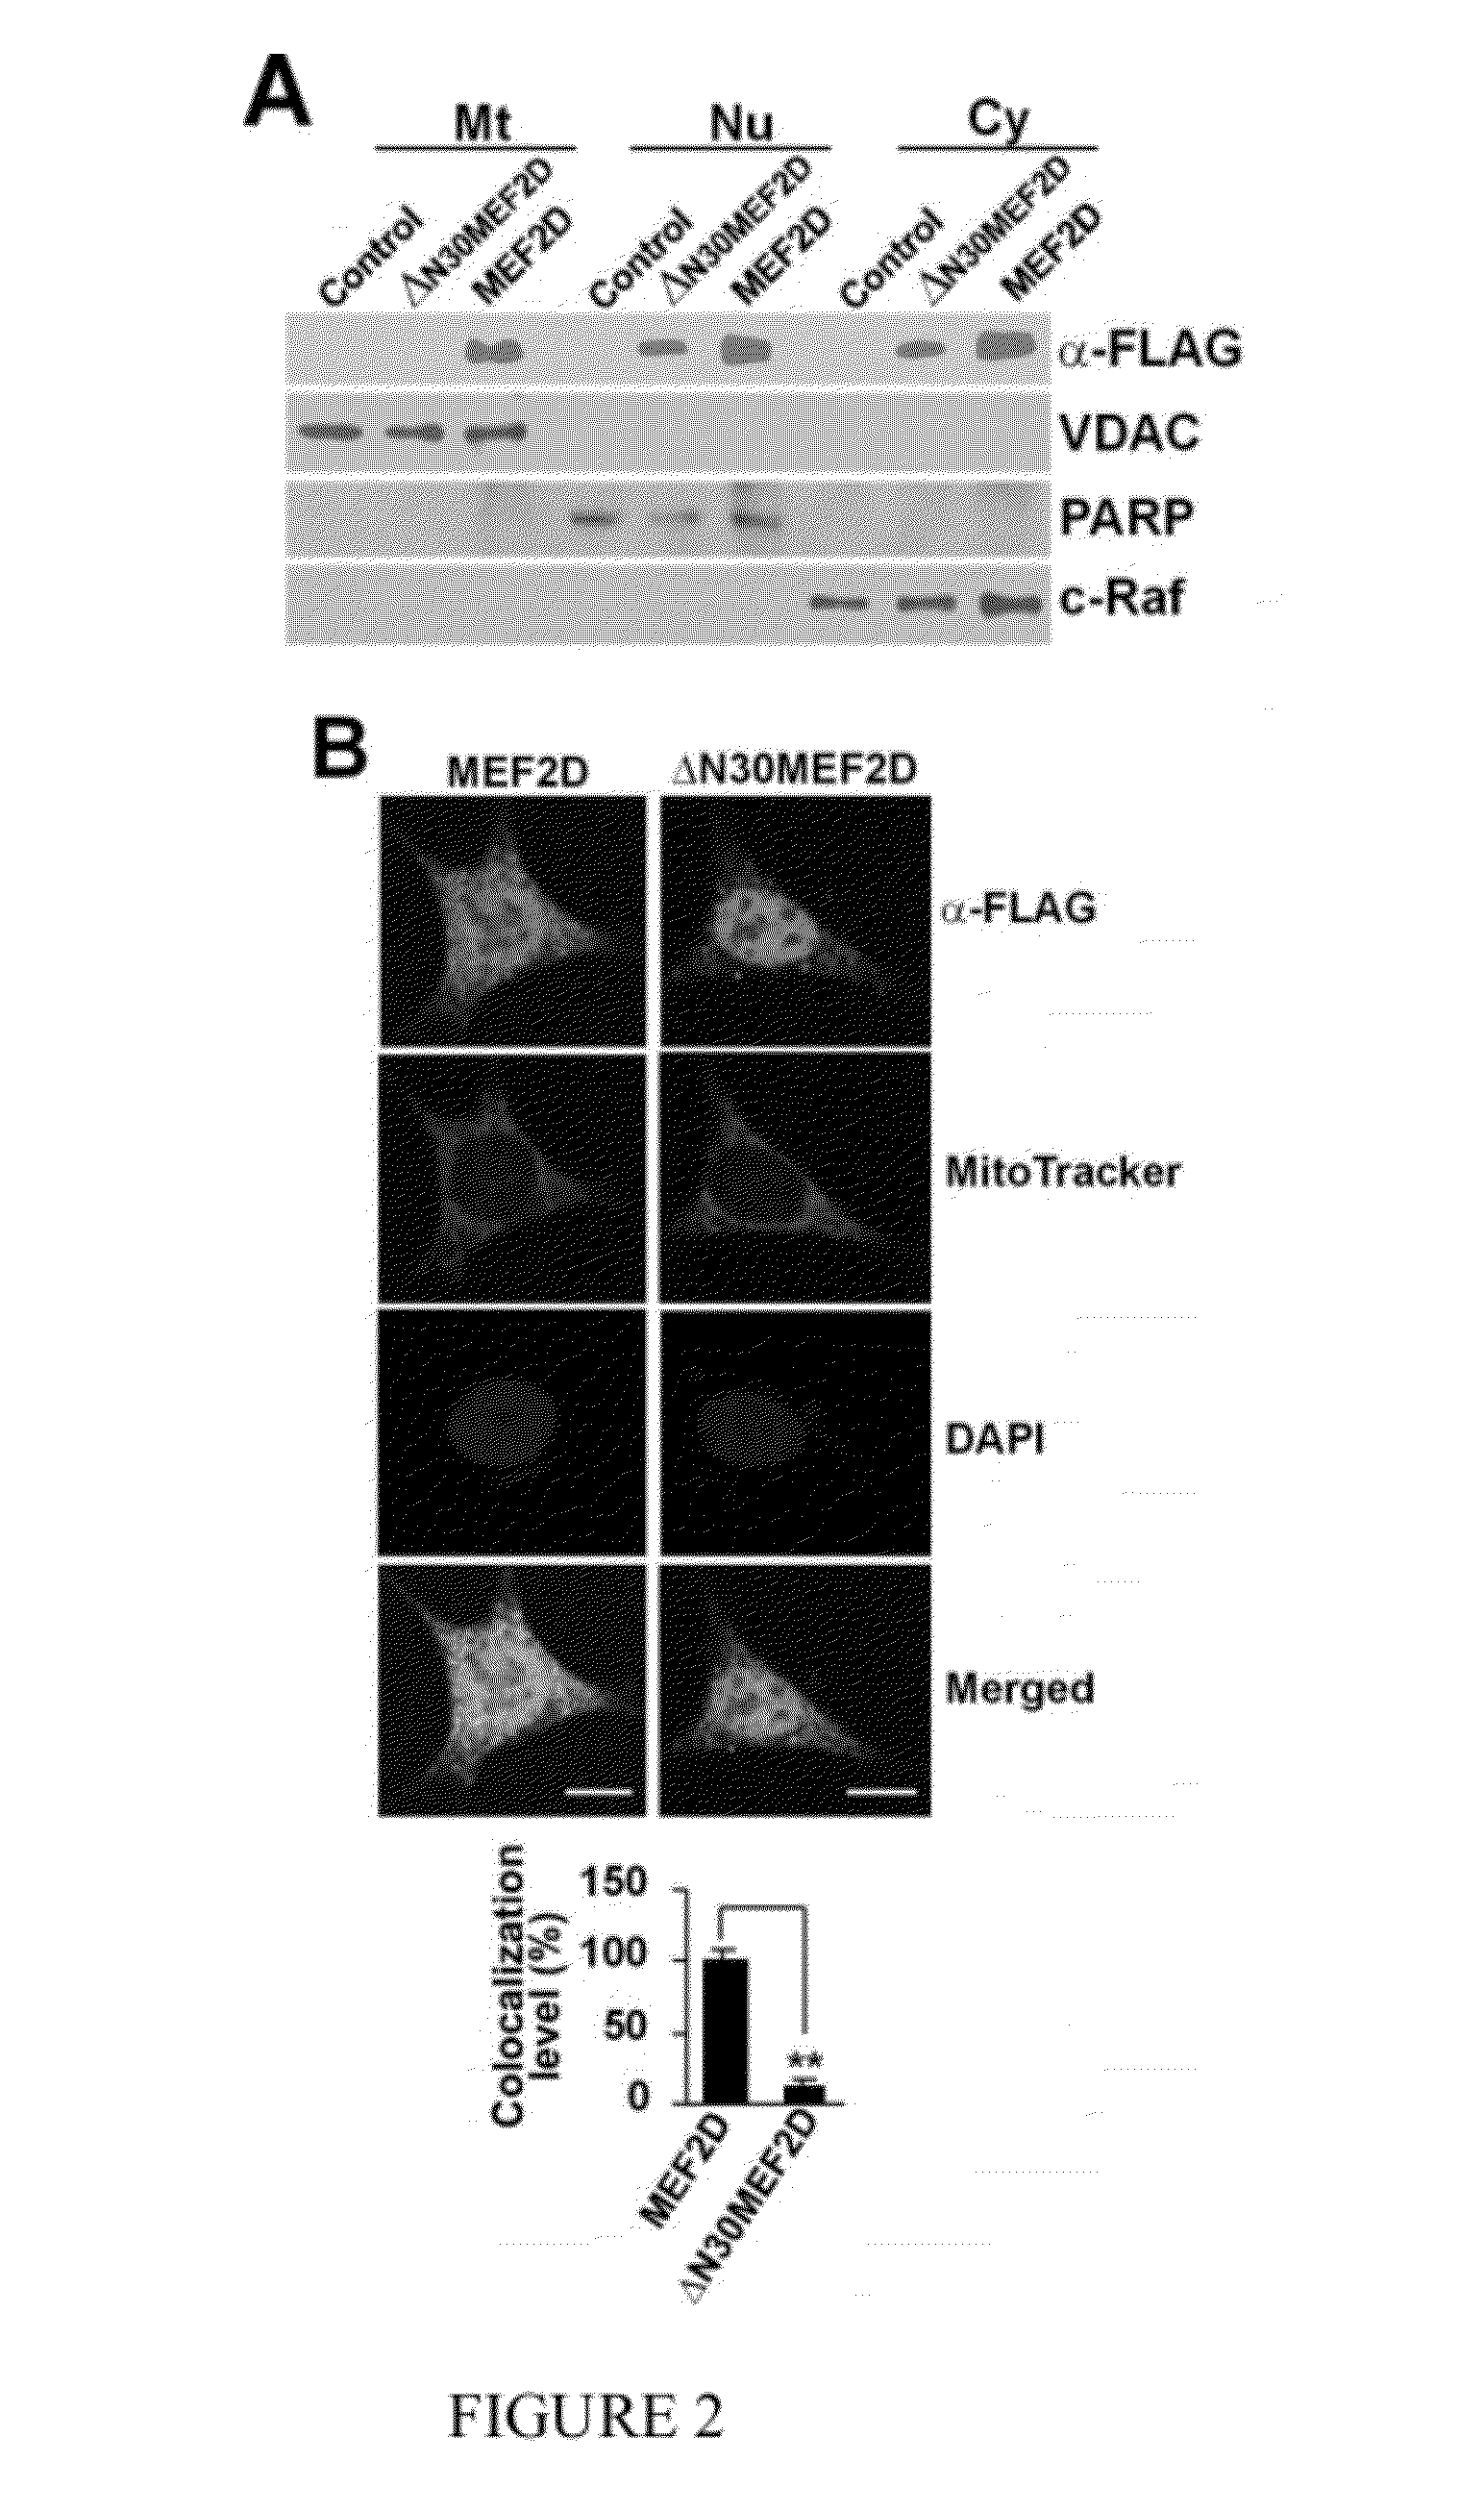 Compositions and modulation of myocyte enhancer factor 2 (MEF2)